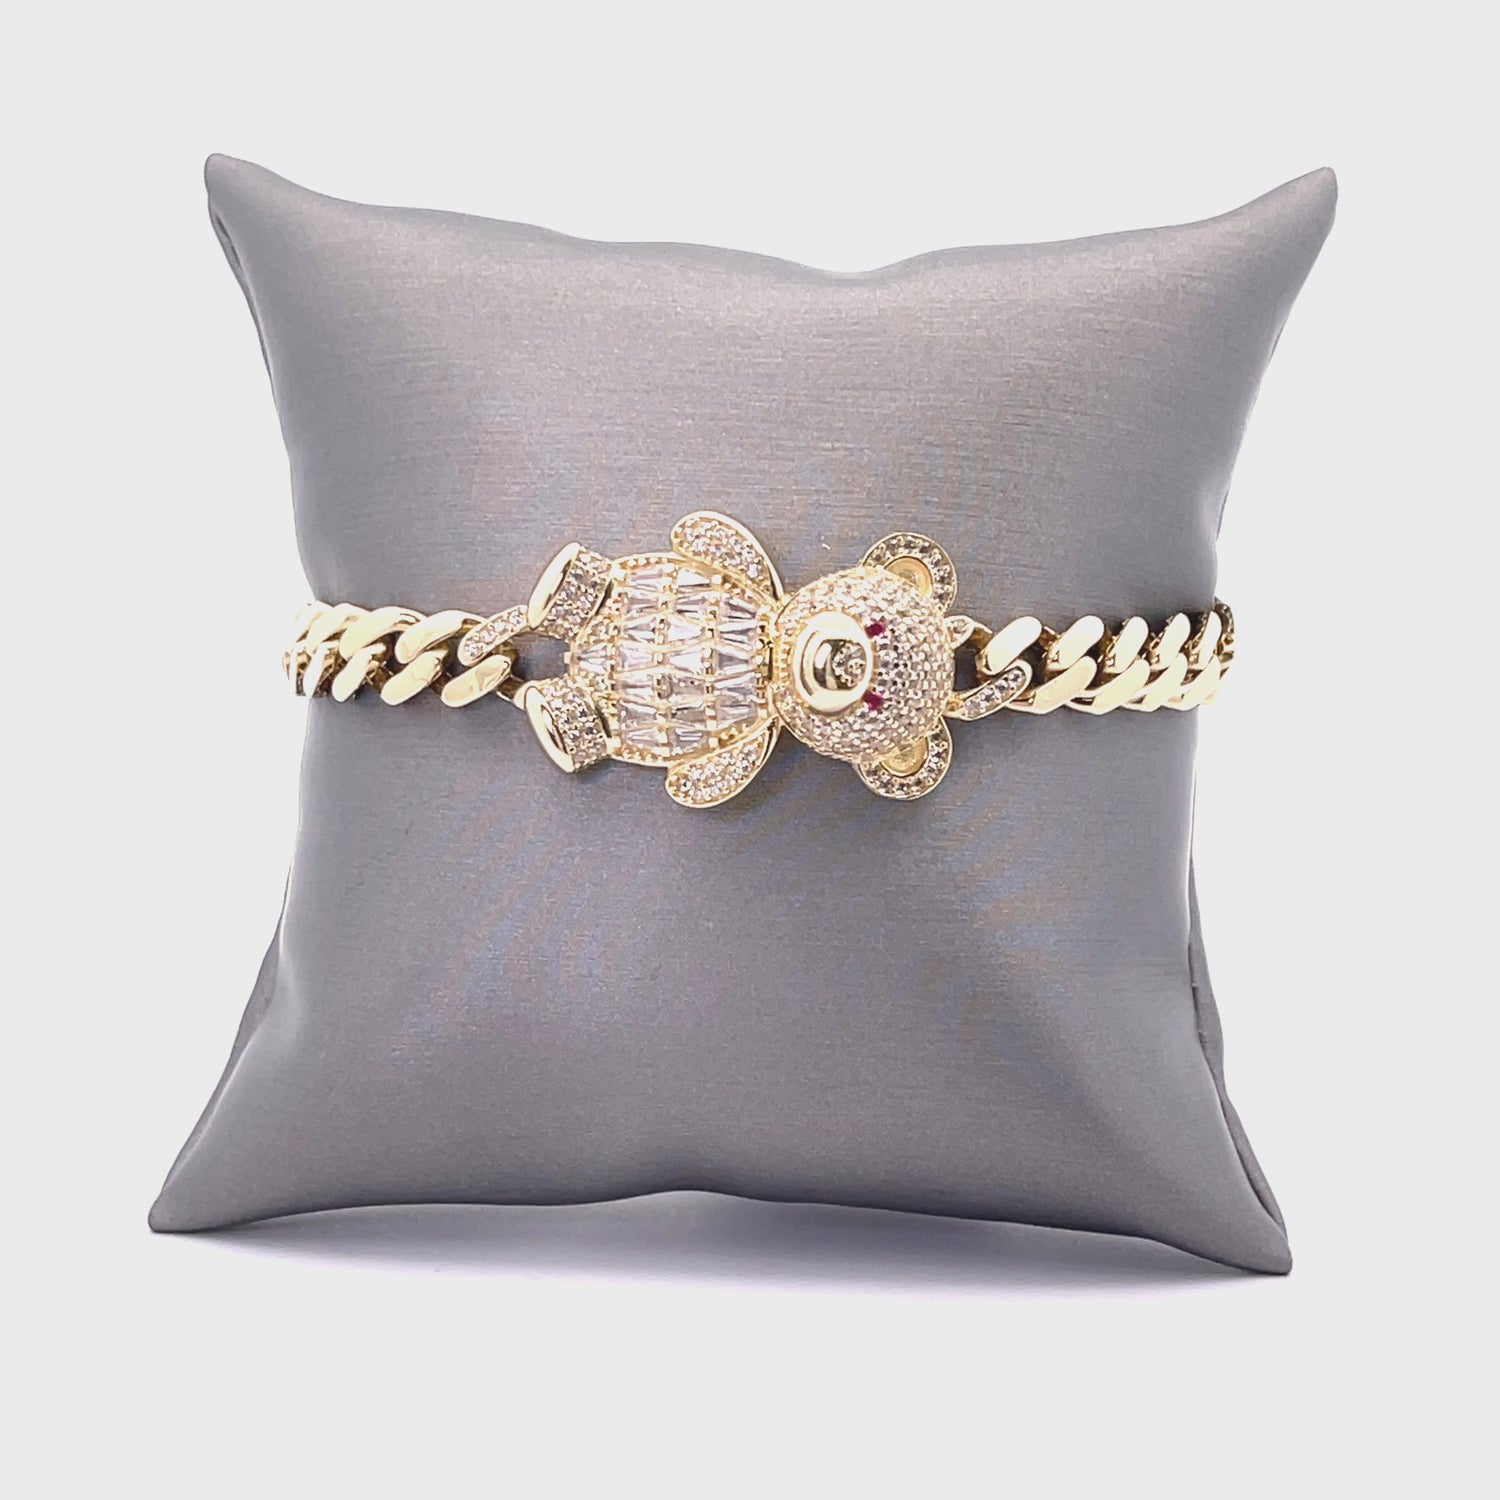 Chanel Bling Pillow 